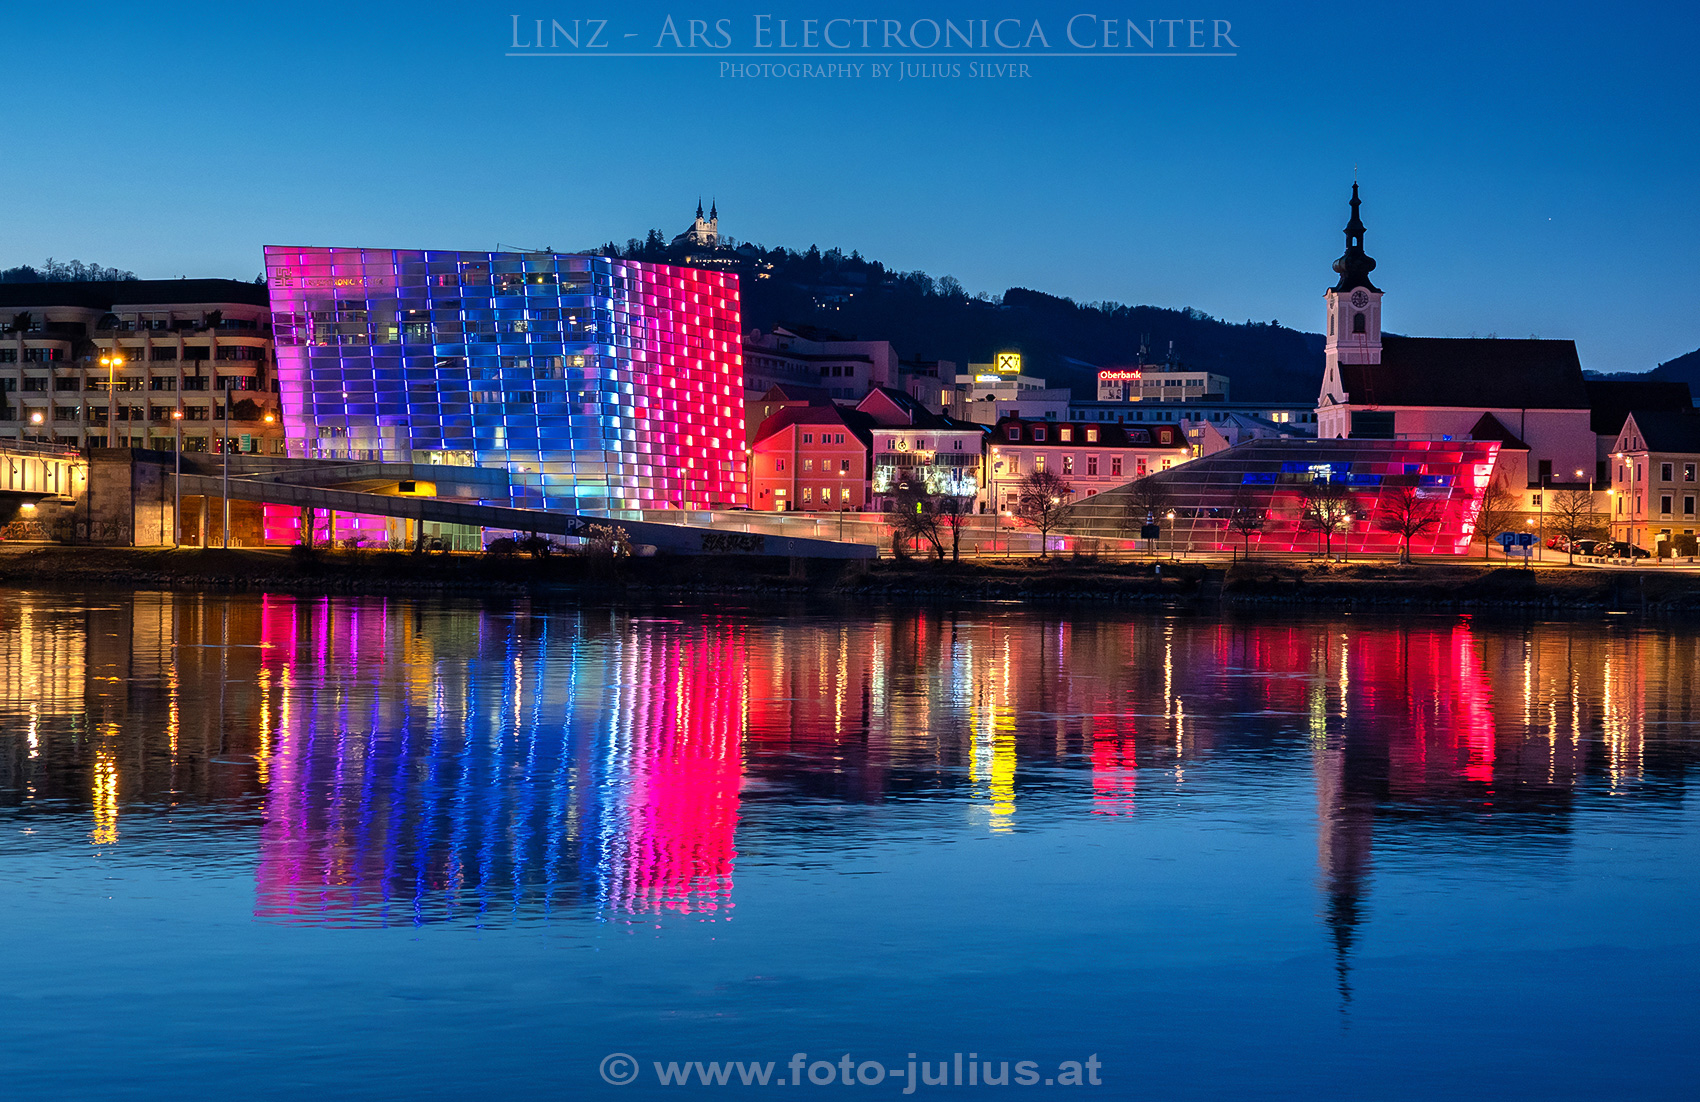 Linz_103a_Ars_Electronica_Center.jpg, 873kB